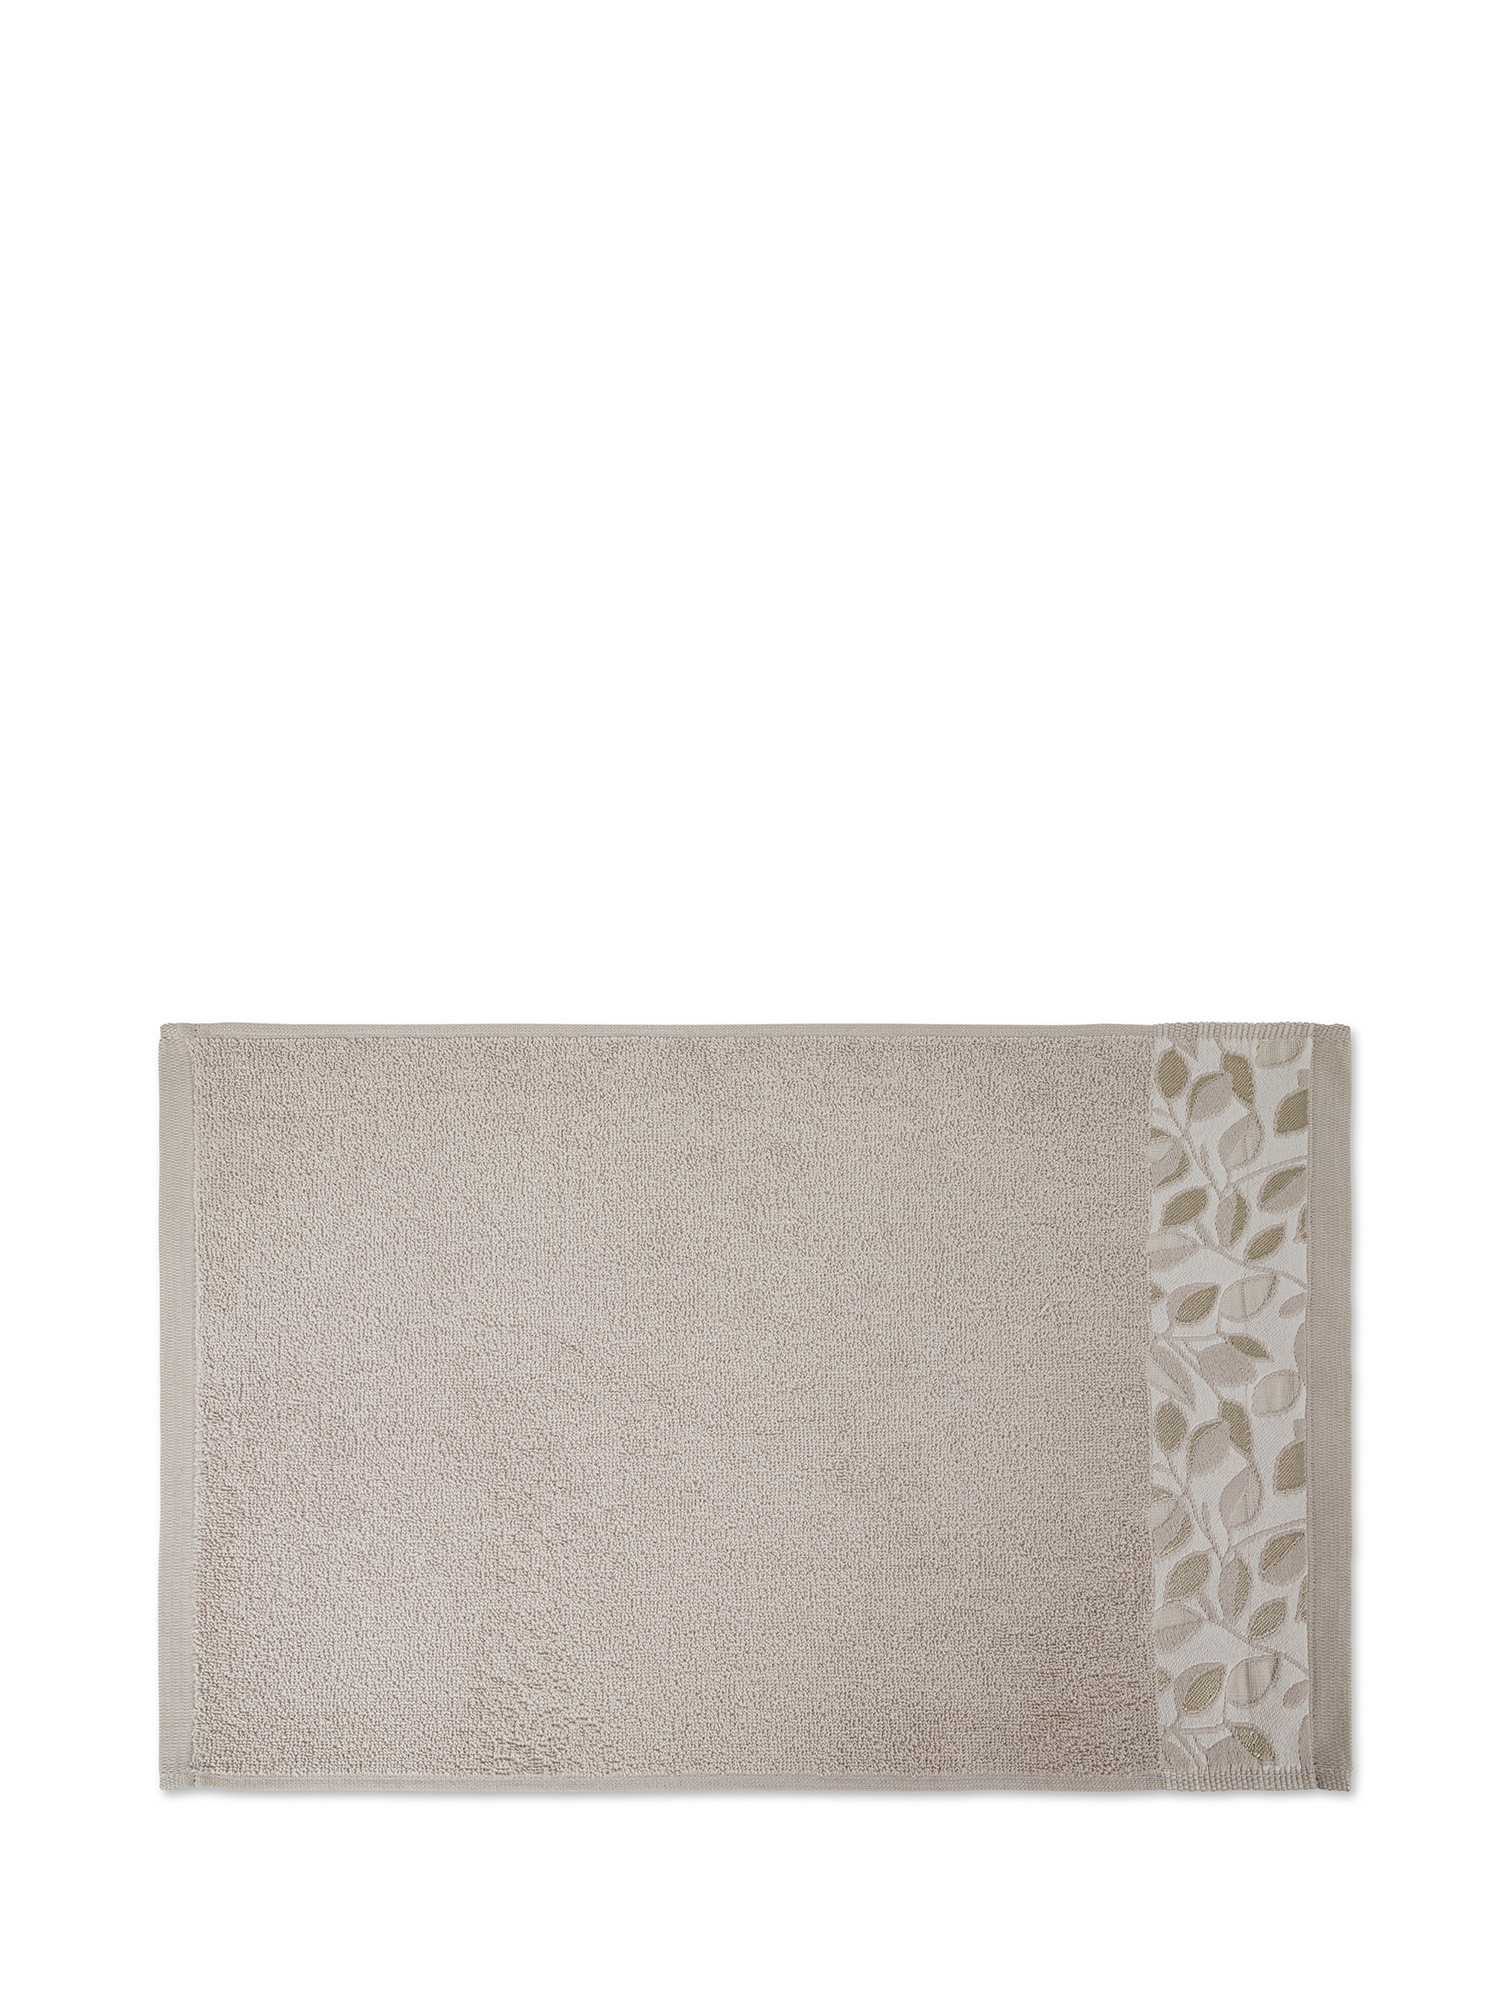 Asciugamano in spugna di puro cotone motivo foglie, Sabbia, large image number 1